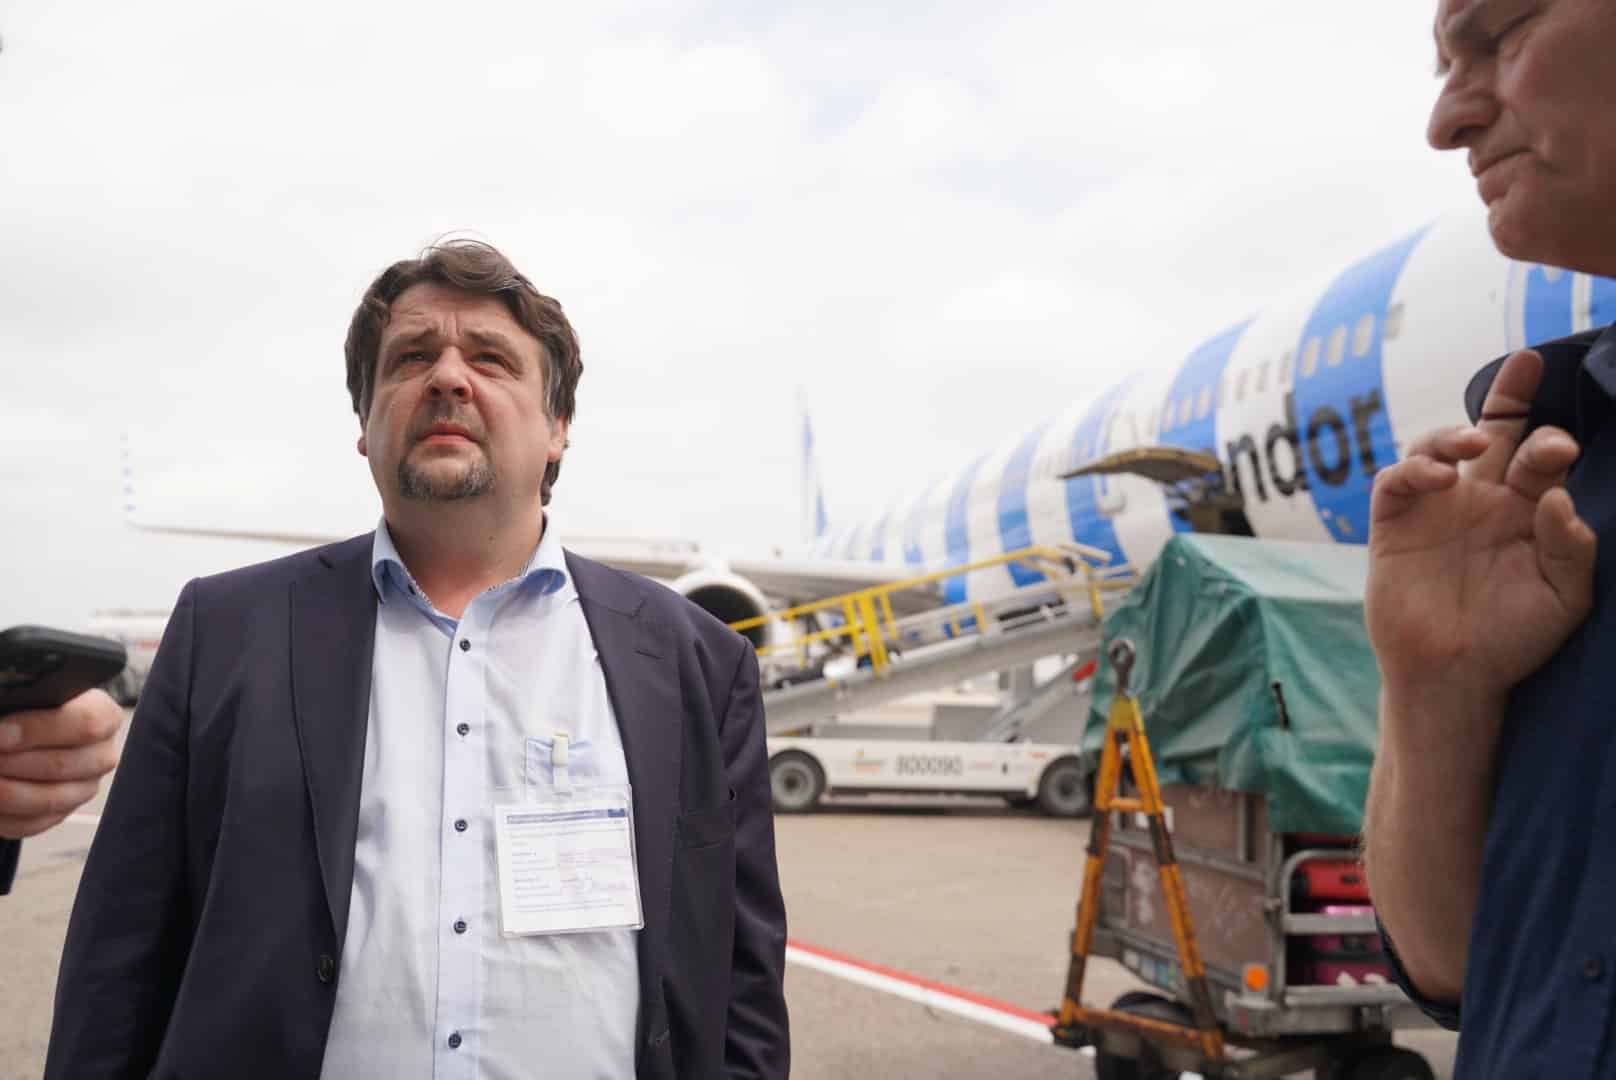 Dennis Radtke MEP (CDU) 在杜塞尔多夫机场向自己介绍了当前的情况。